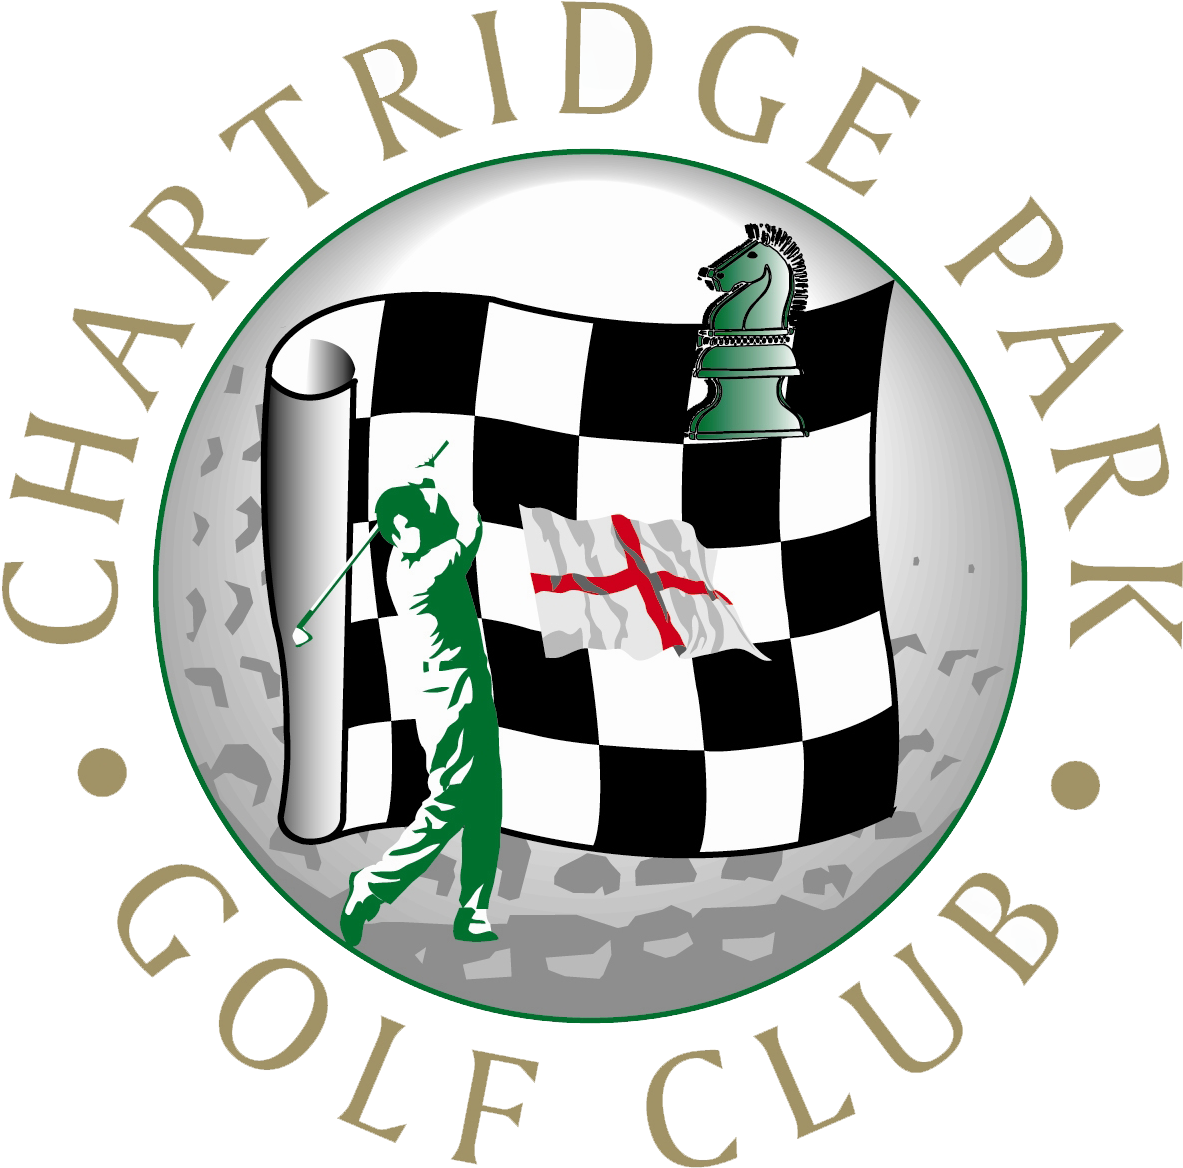 Chartridge Park Gc - Chartridge Park Golf Club Logo (1299x1299)